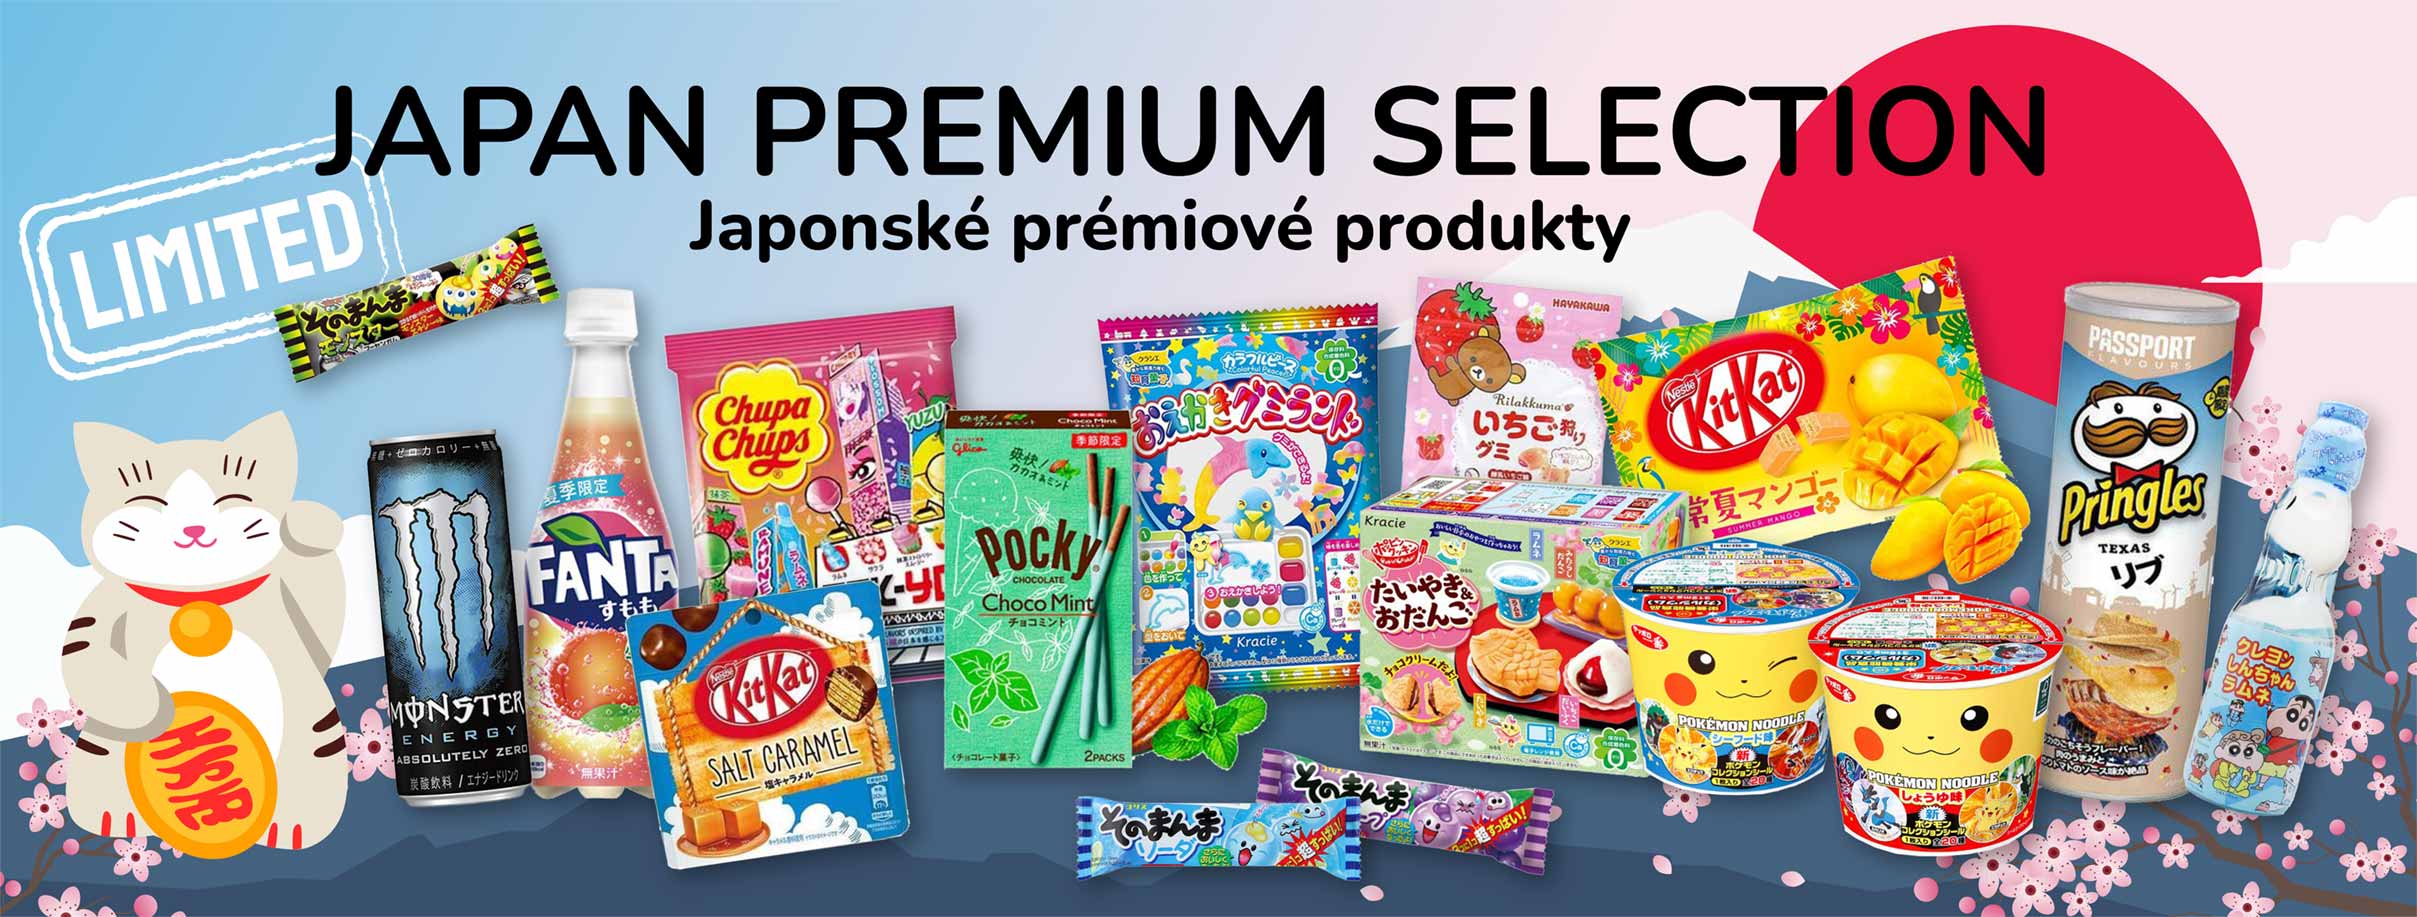 Japan Premium Selection